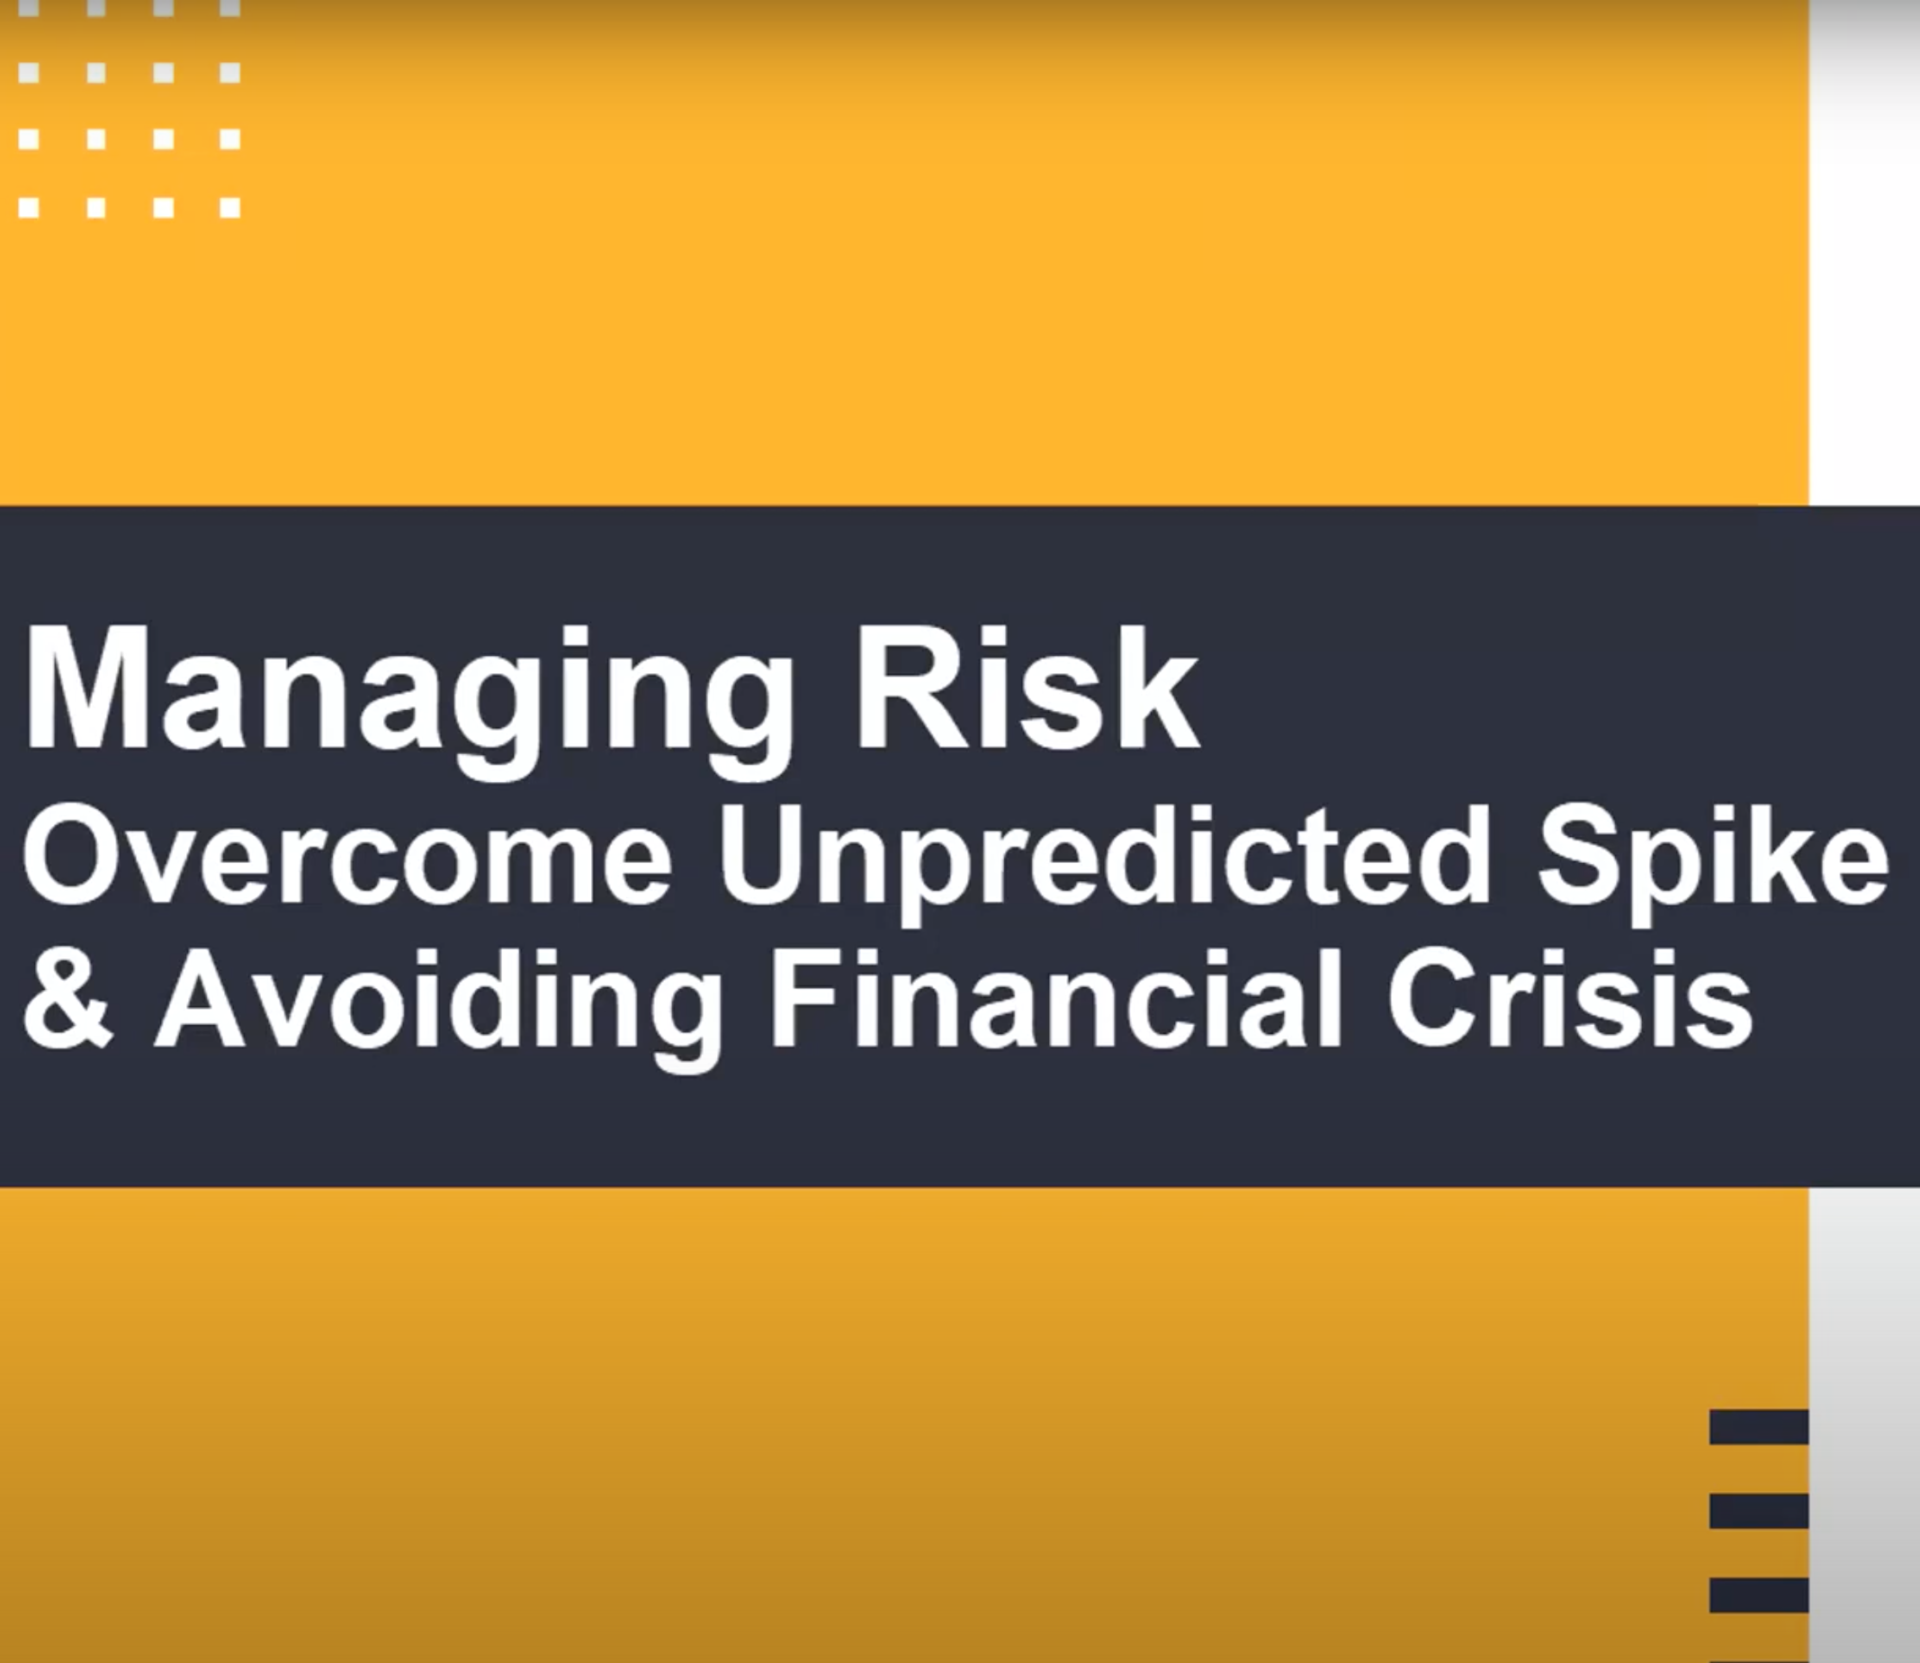 Managing Risk: Overcome Unpredicted Spike & Avoiding Financial Crisis